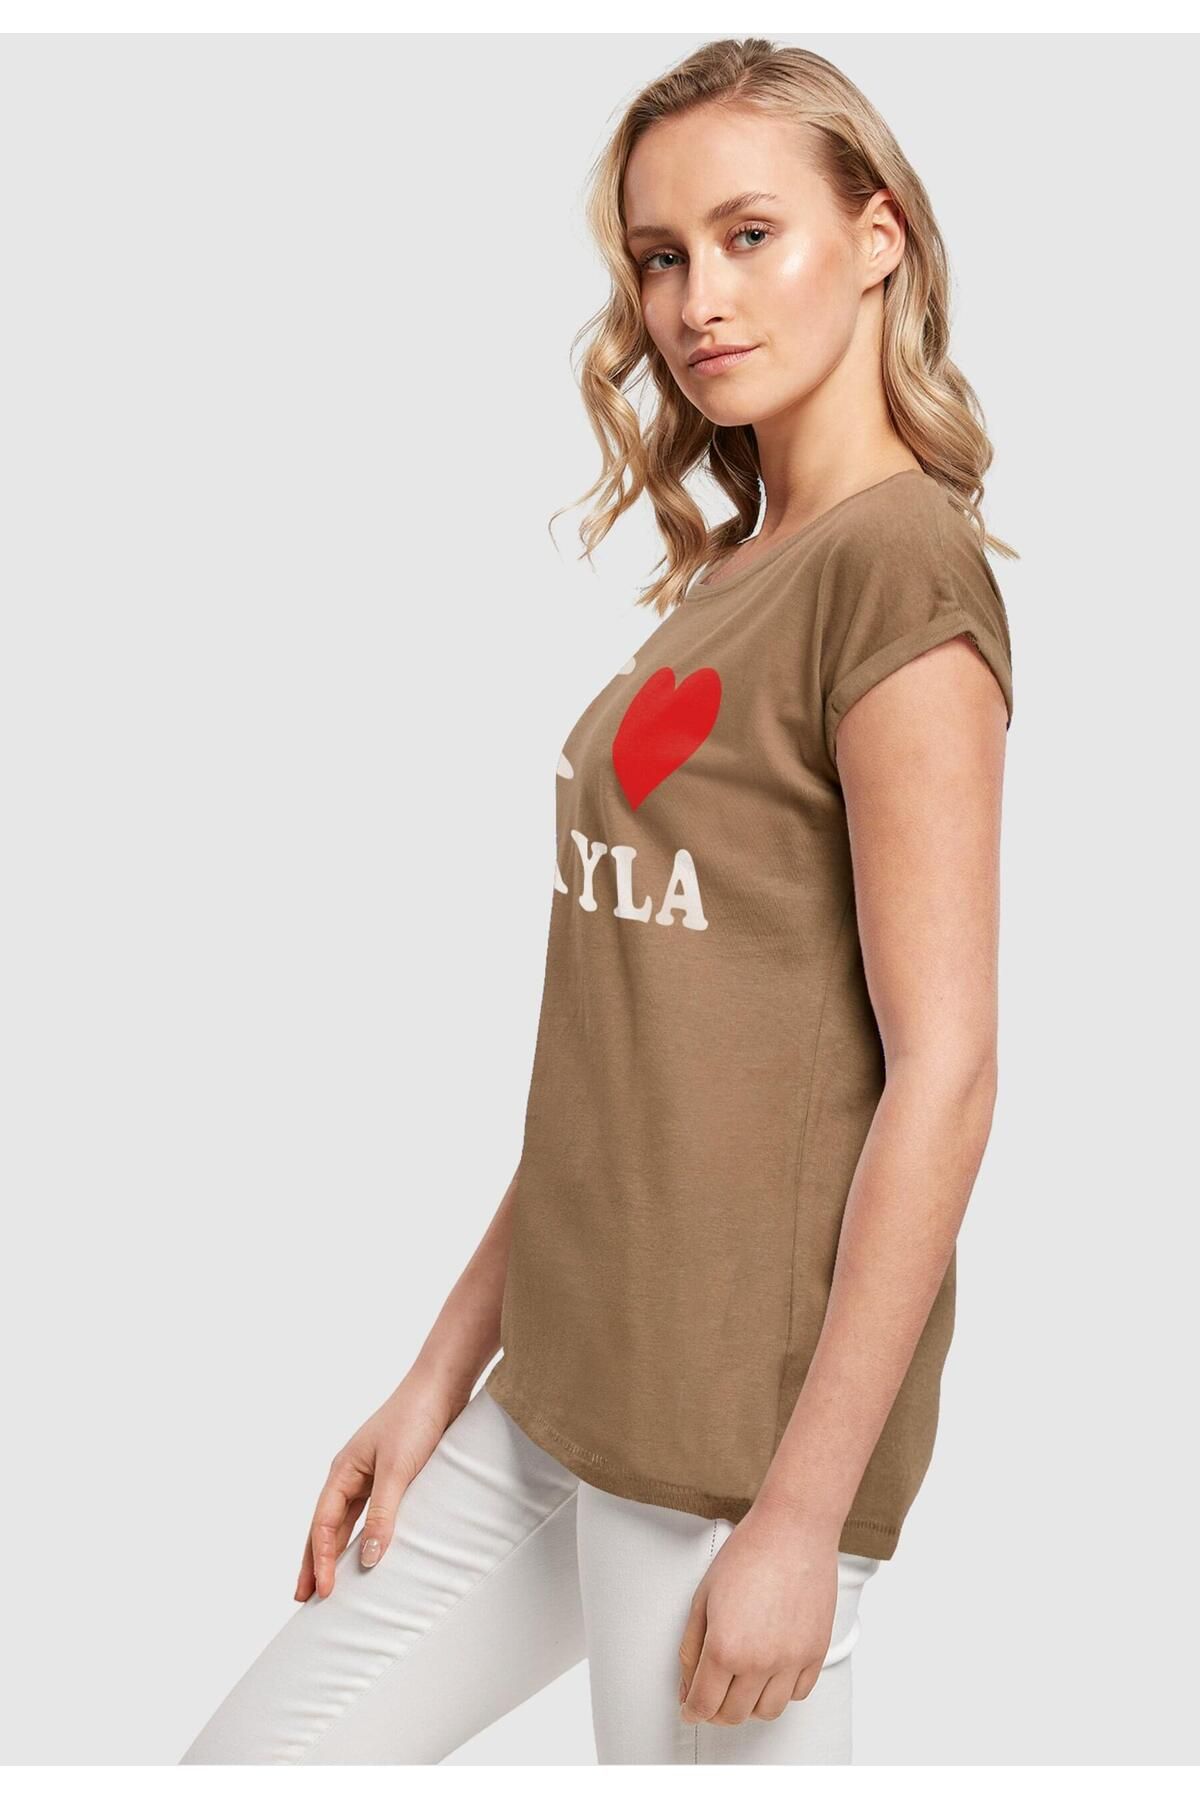 Merchcode Damen Ladies I Love Layla X T-Shirt - Trendyol